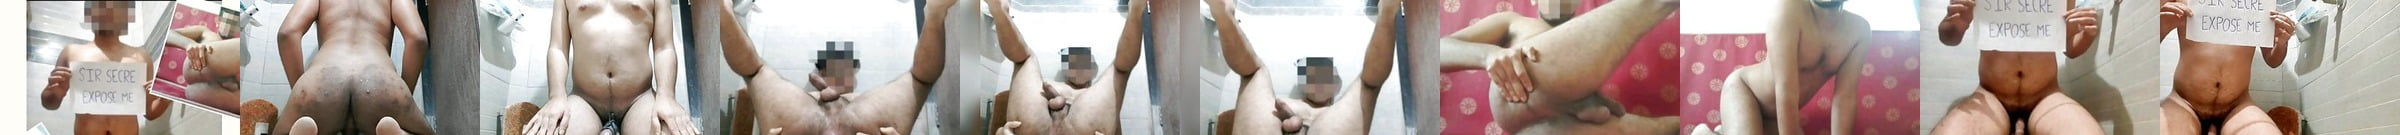 Nude In Bathroom Gay Bathrooms Porn Video E6 Xhamster Xhamster 3227